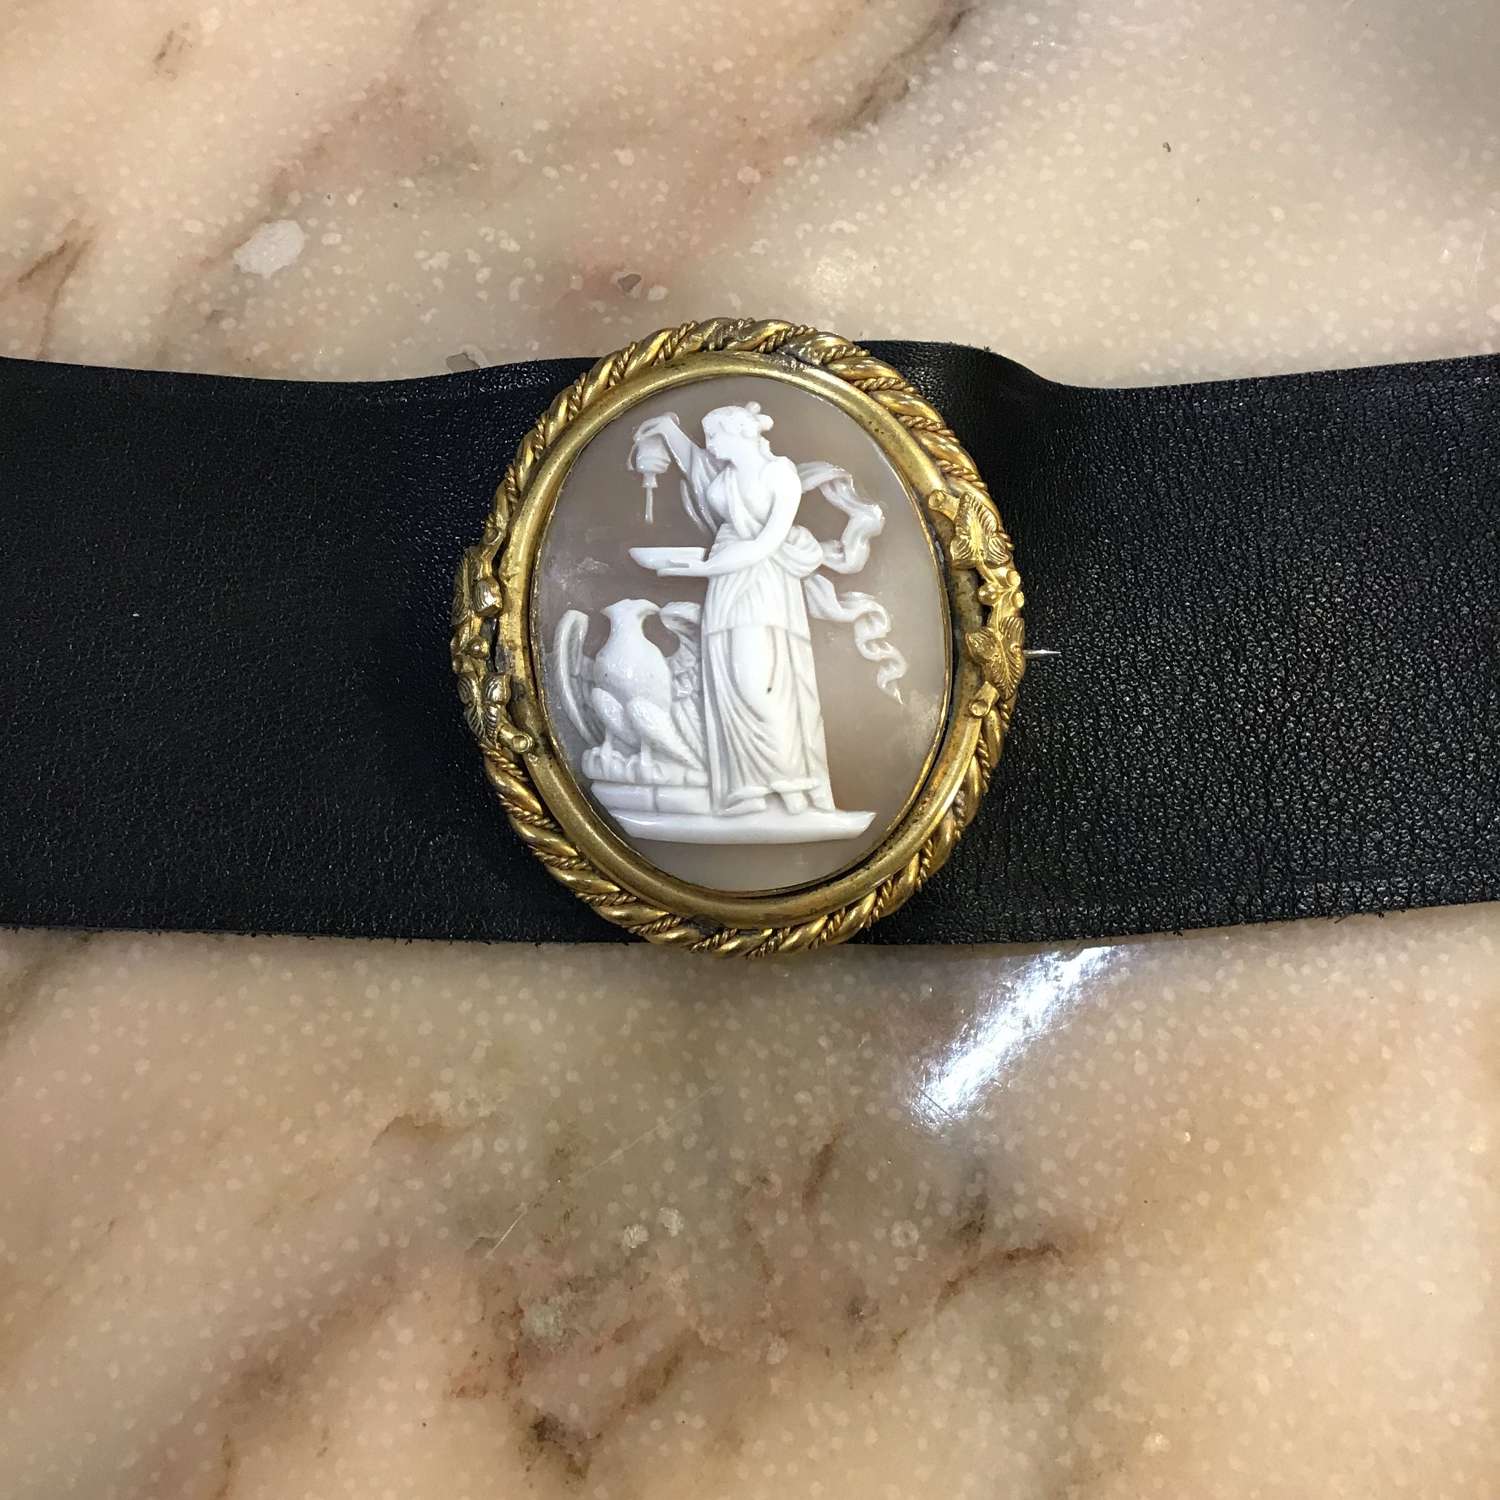 Antique cameo on black leather bracelet